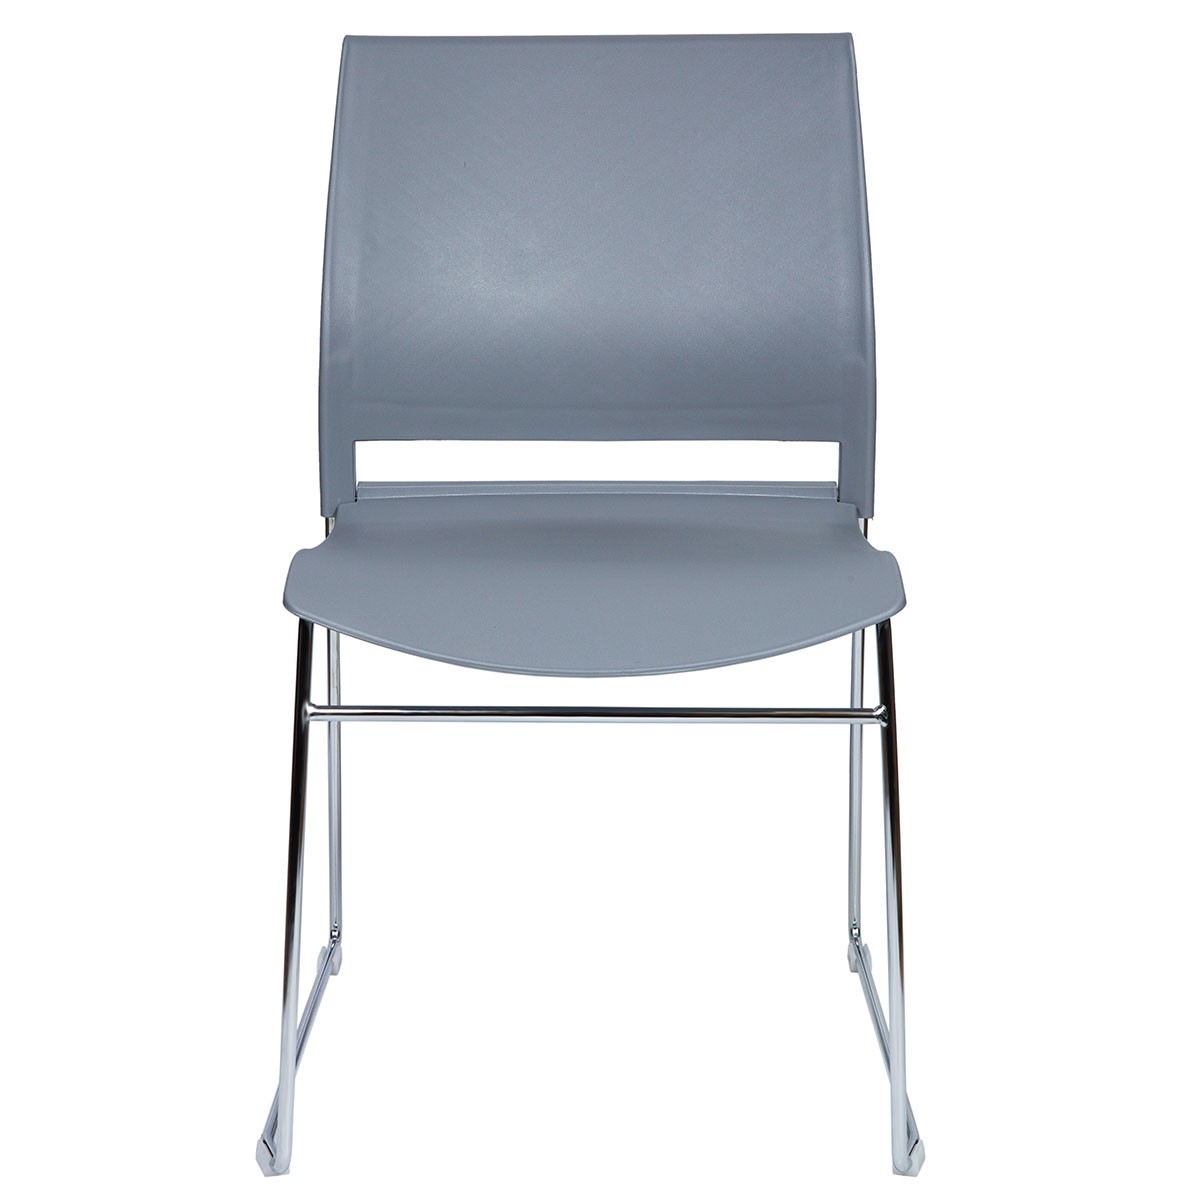 картинка Стул / Four grey / серый пластик / хром база 824C grey от Мебельная мода